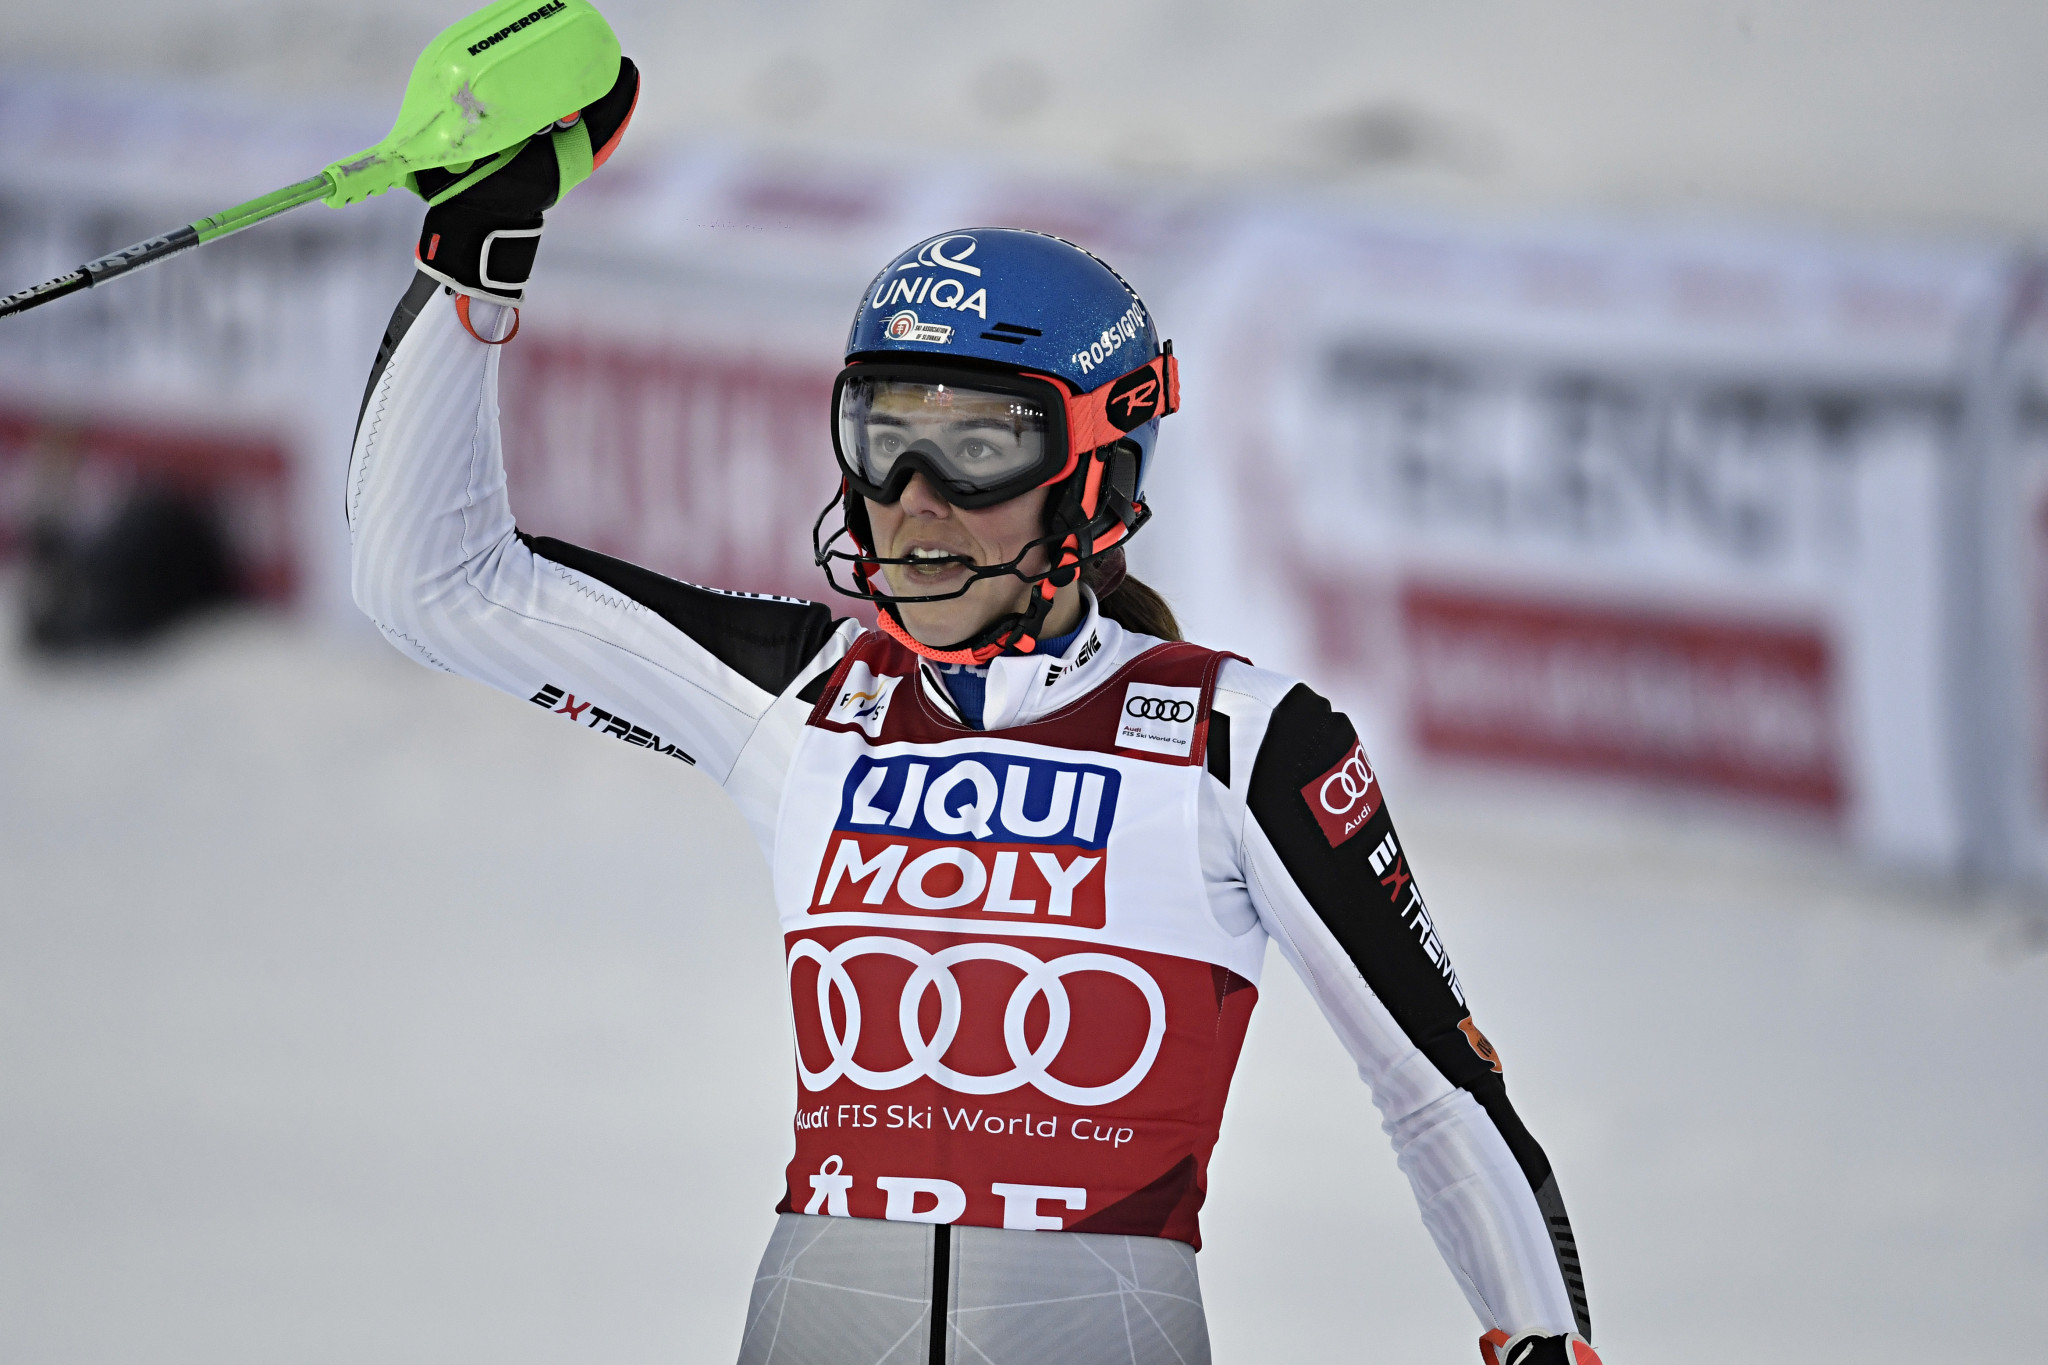 Vlhová takes lead of FIS Alpine Ski World Cup after slalom victory in Åre